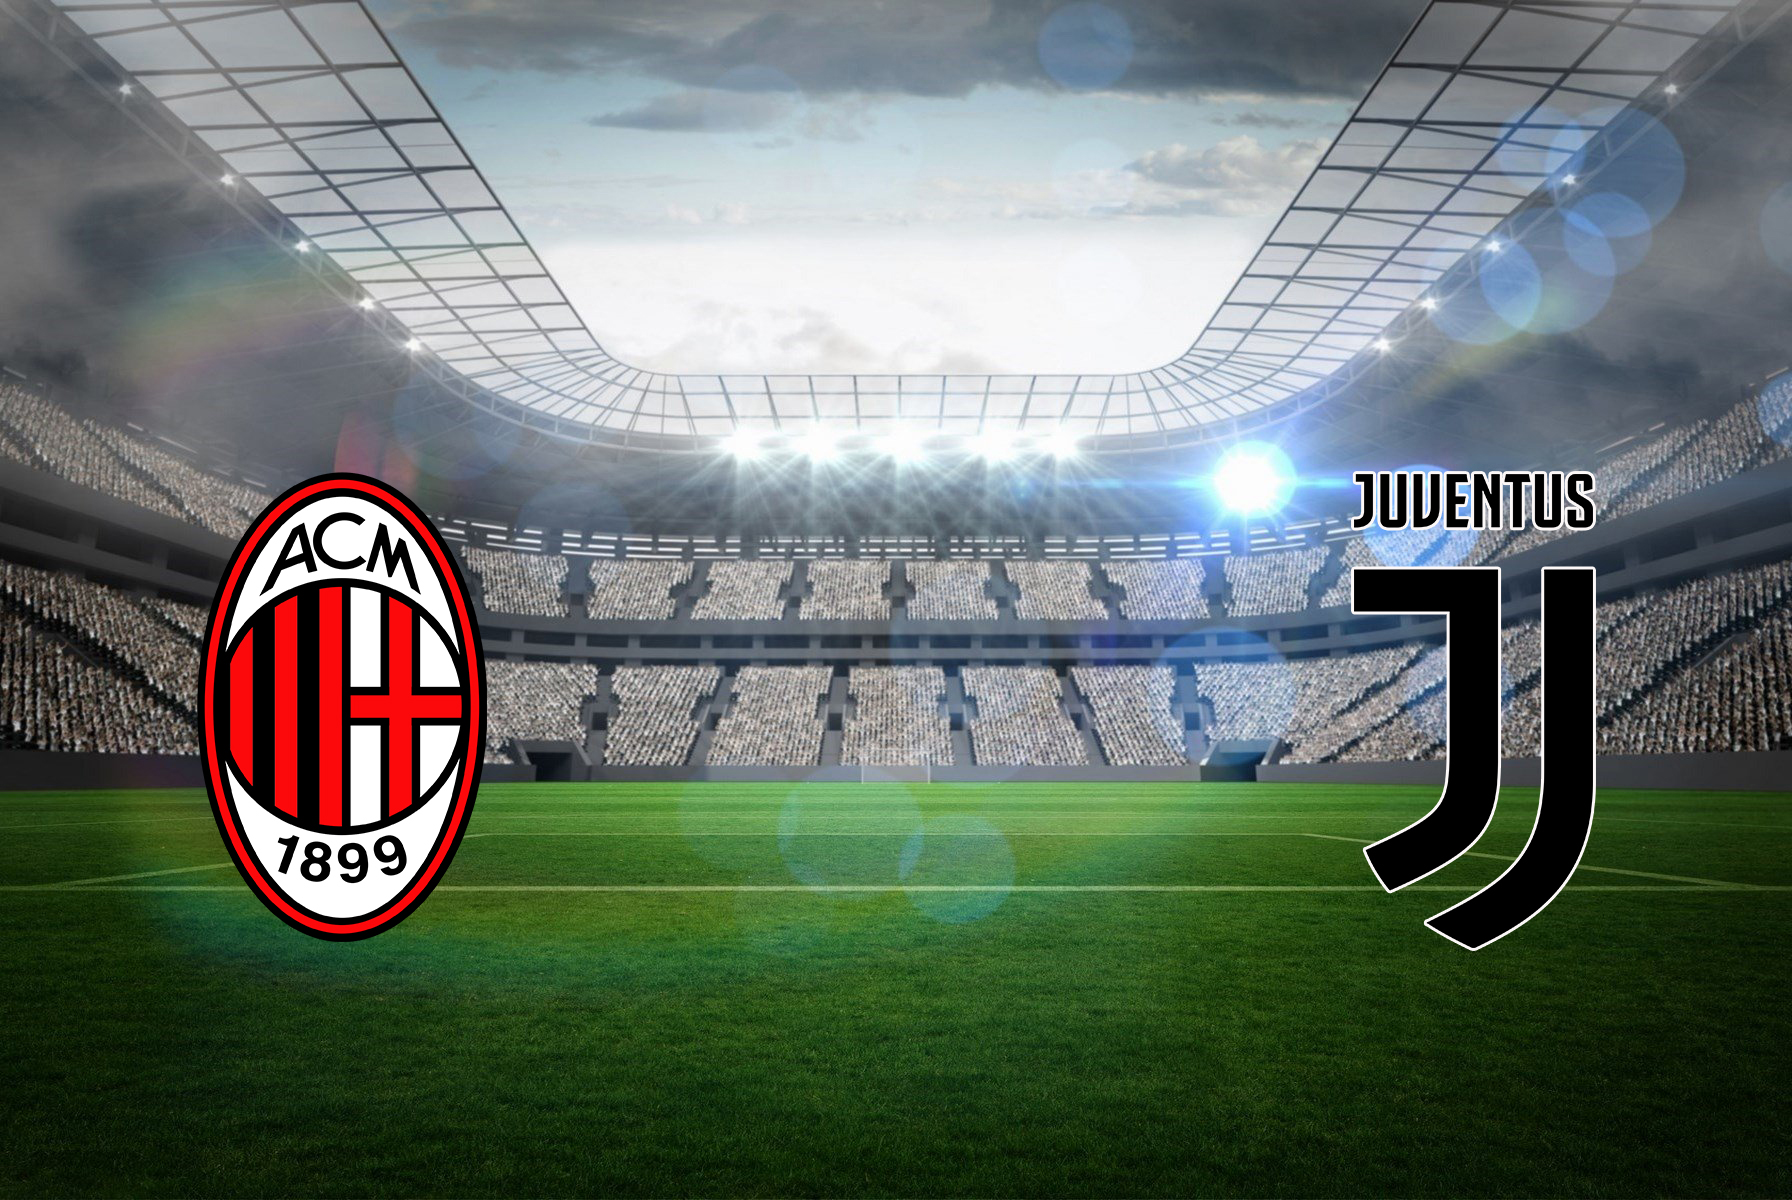 soi-keo-ca-cuoc-bong-da-ngay-9-2-AC Milan-vs-Juventus-do-it-thang-do-nhieu-b9 1